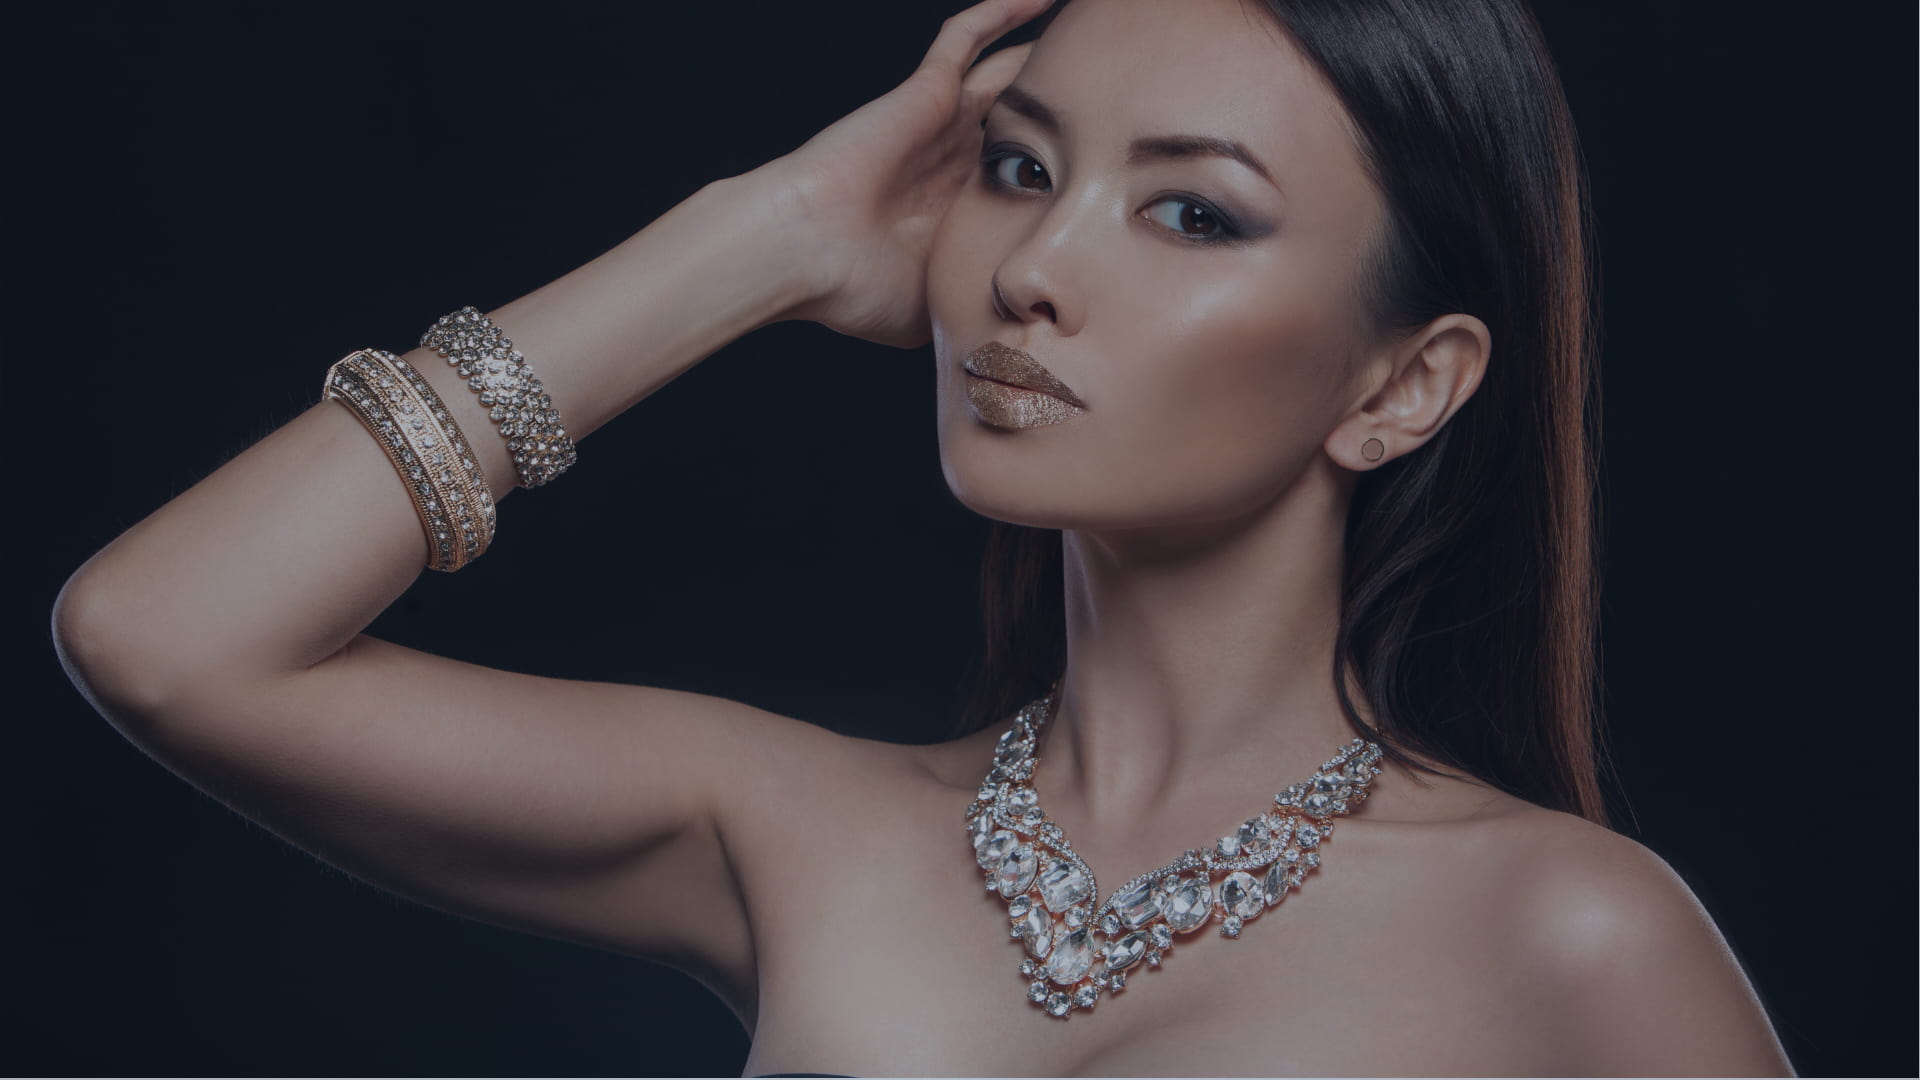 Elegant Asian woman wearing high fashion jewelry